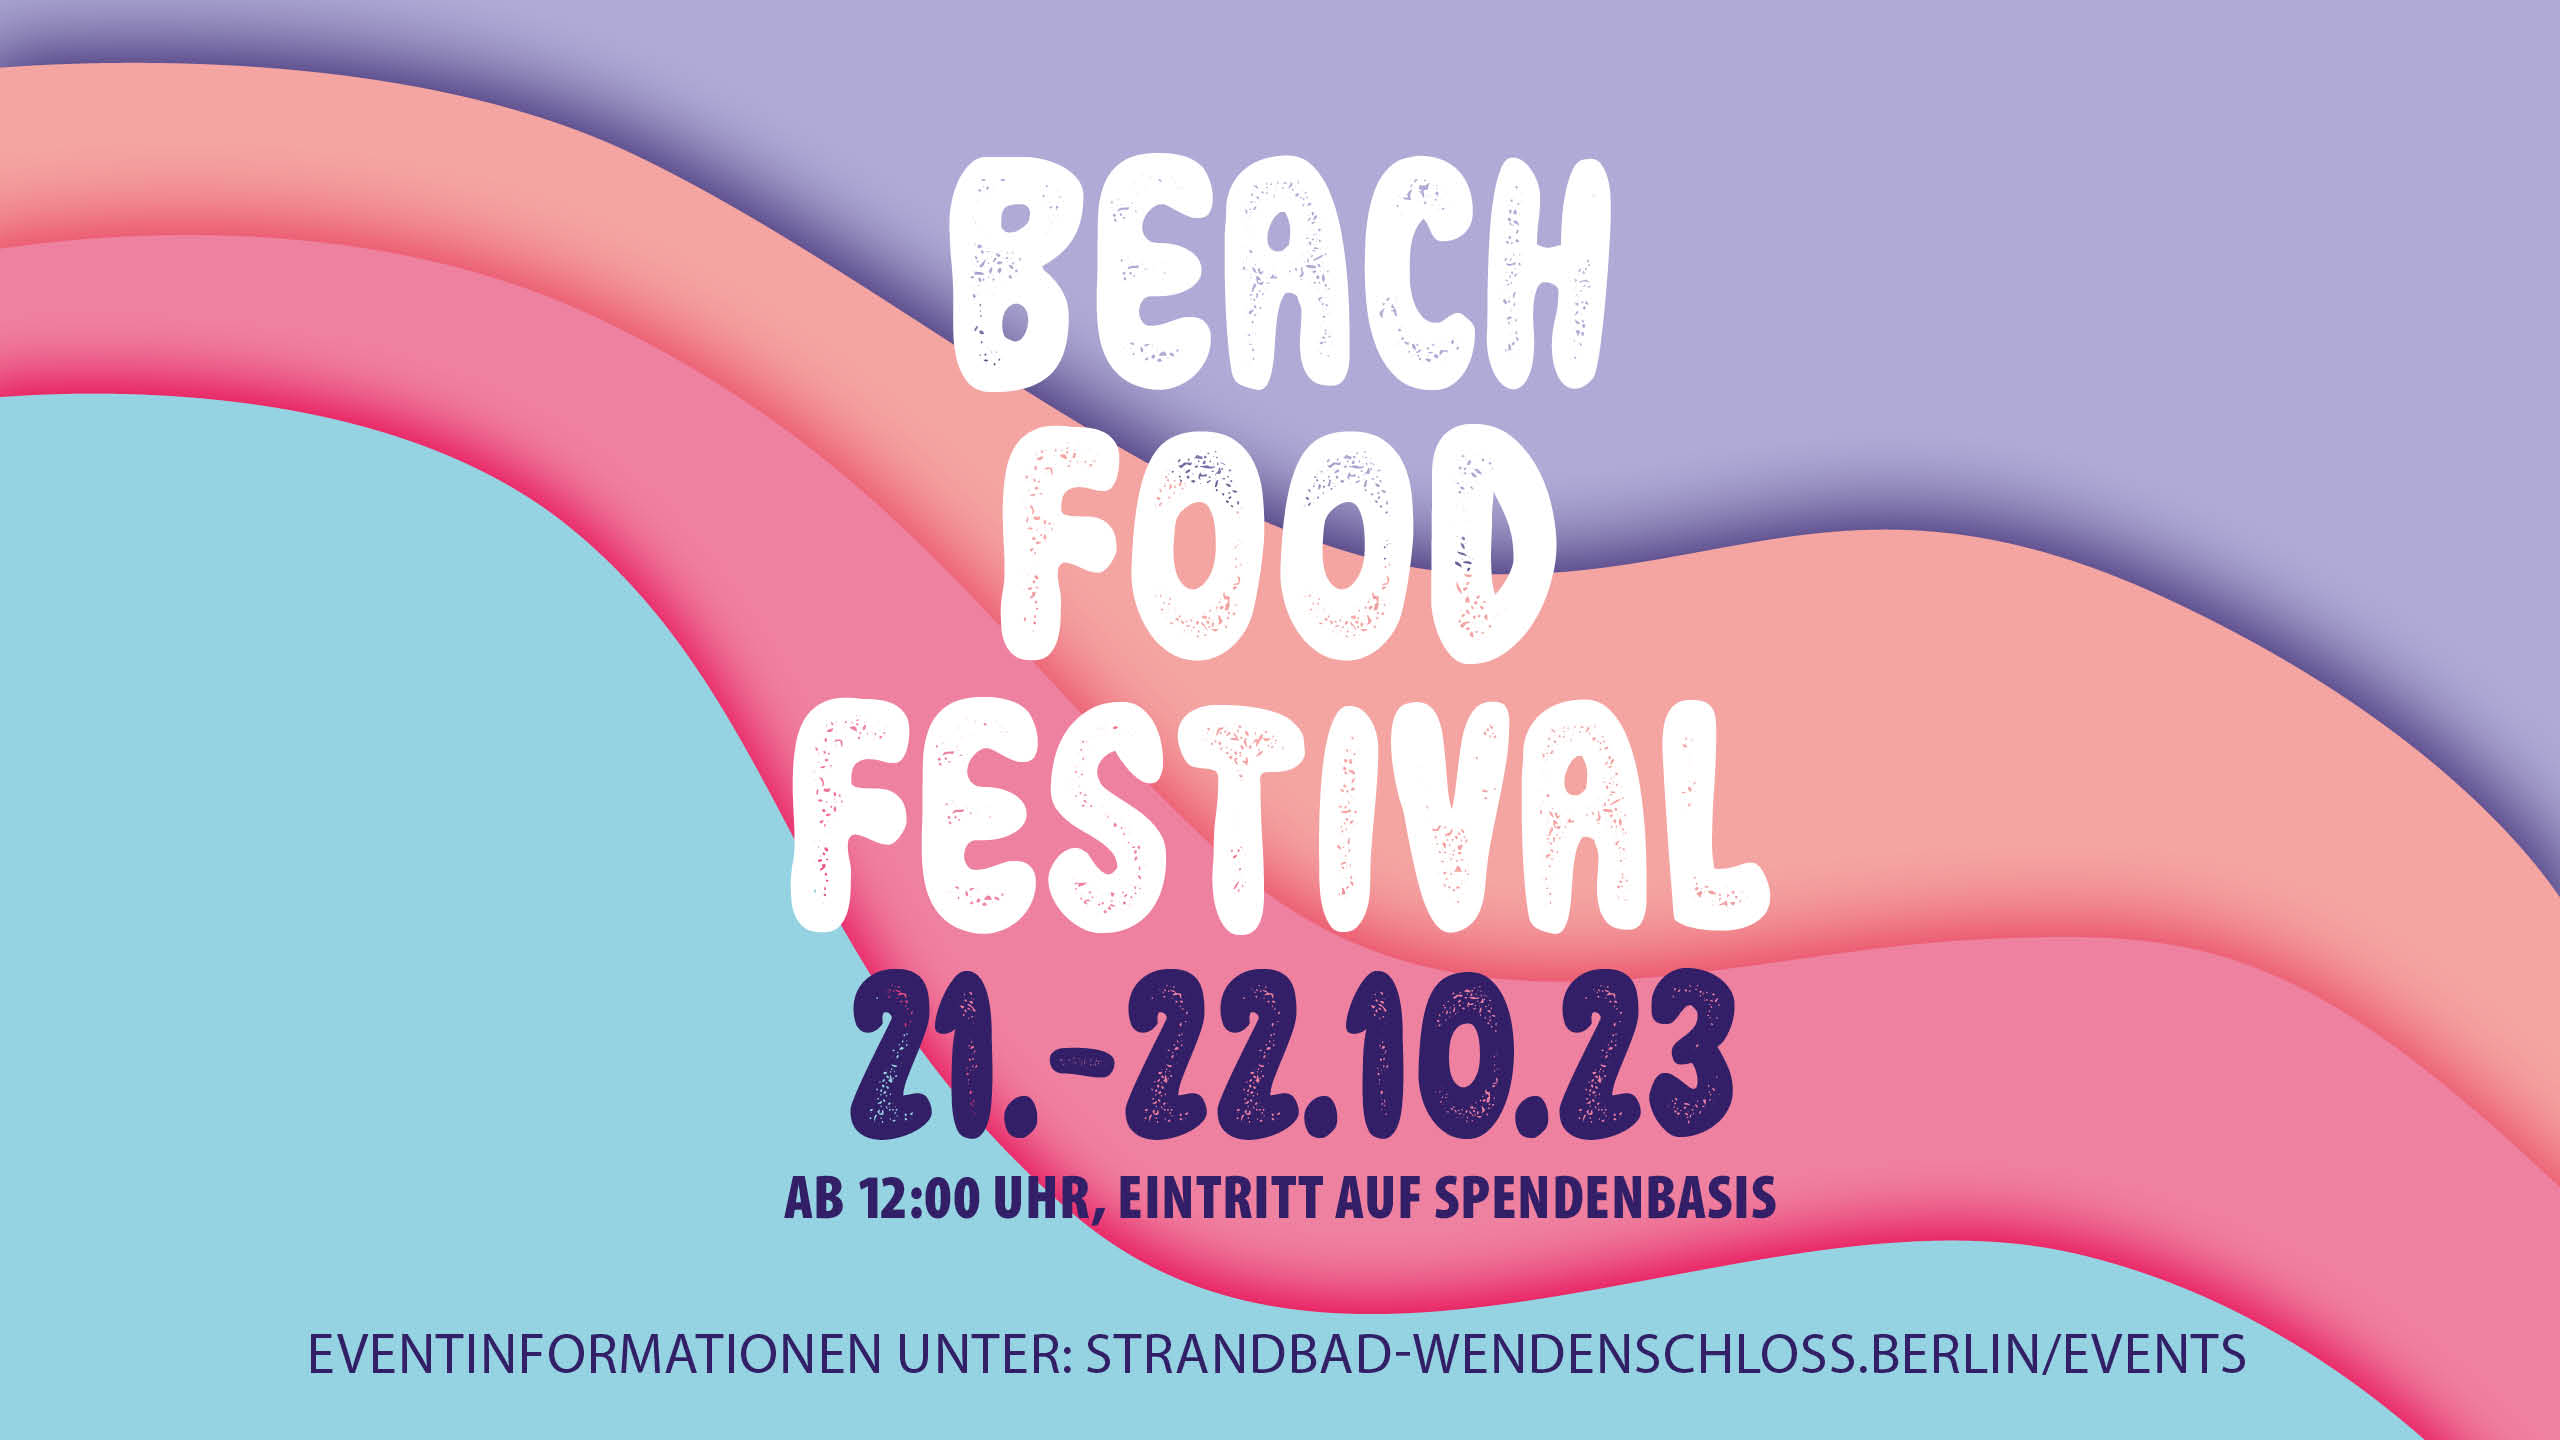 Origami-Workshops beim Beachfood Festival Berlin